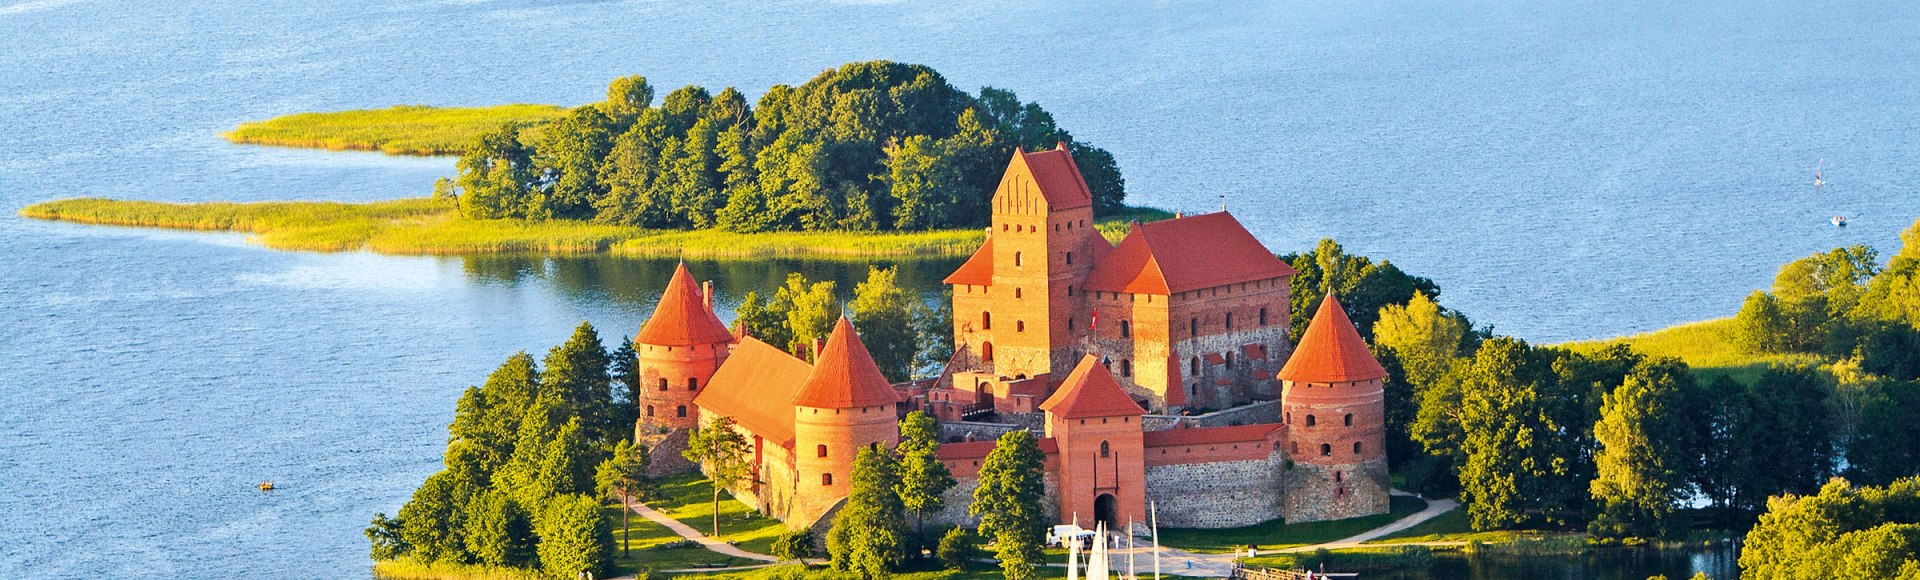 Inselburg Trakai in Litauen, © iStockphoto.com©vikau